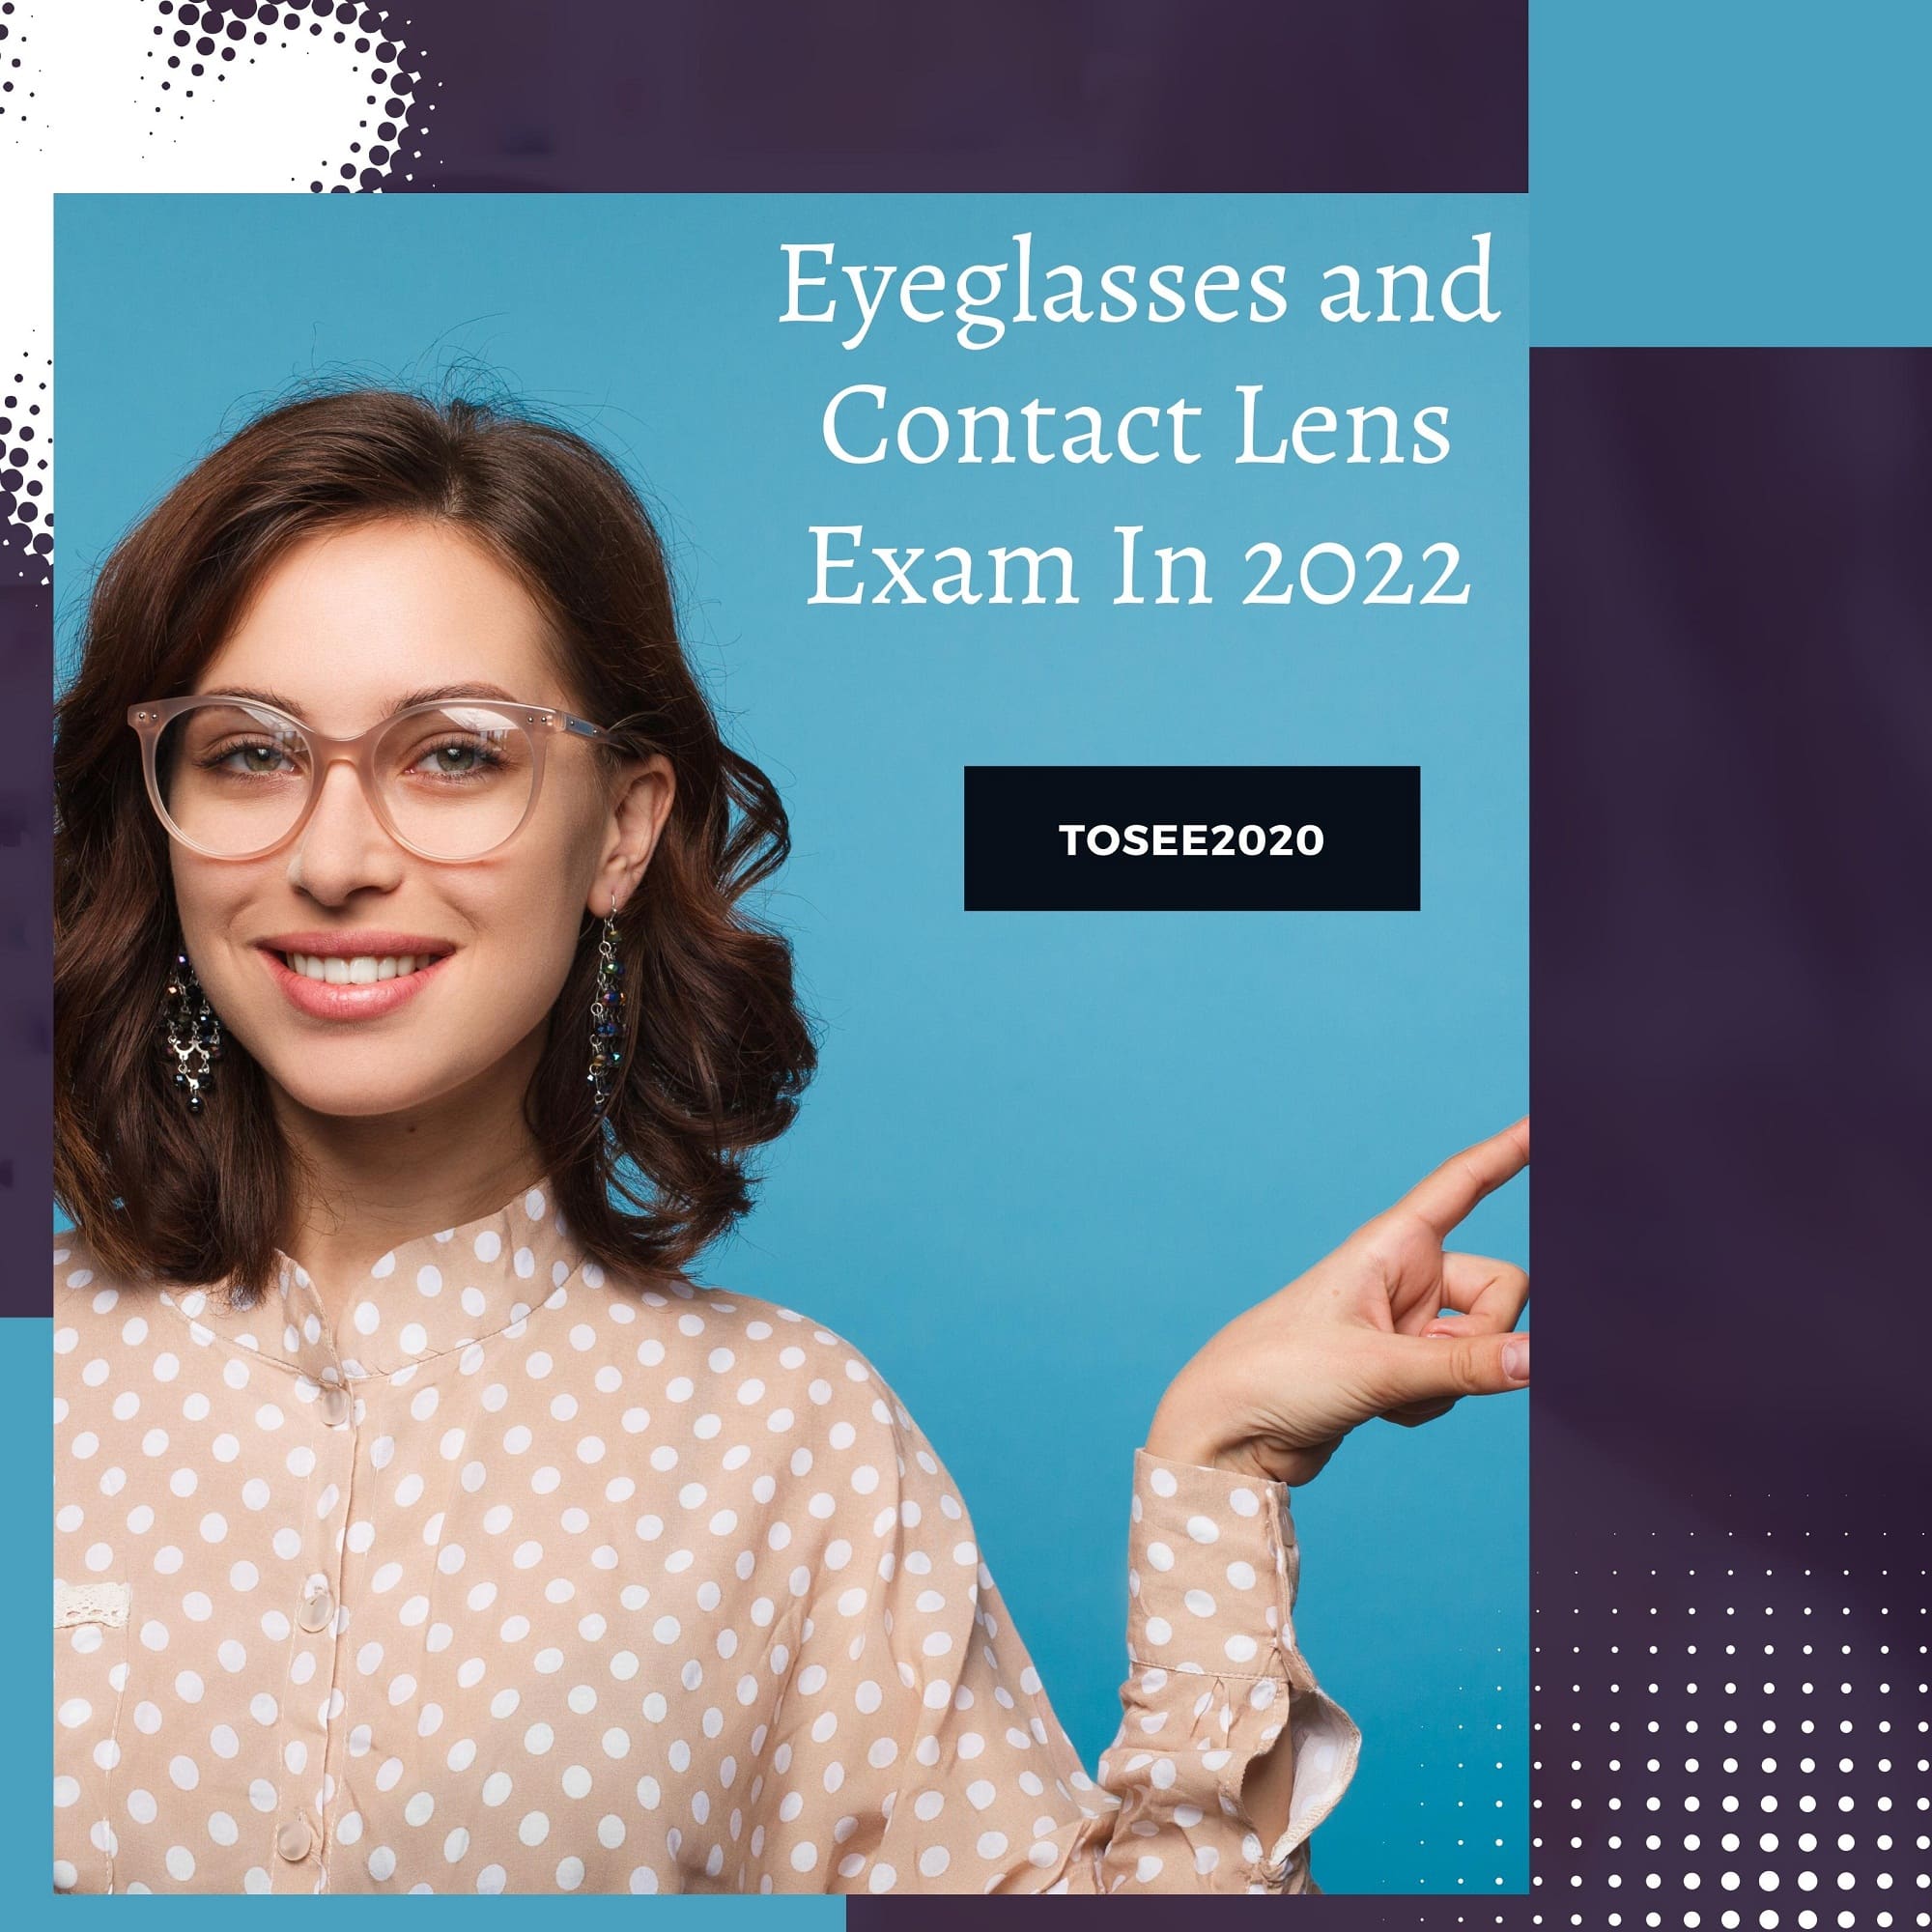 Eyeglasses and Contact Lens Exam